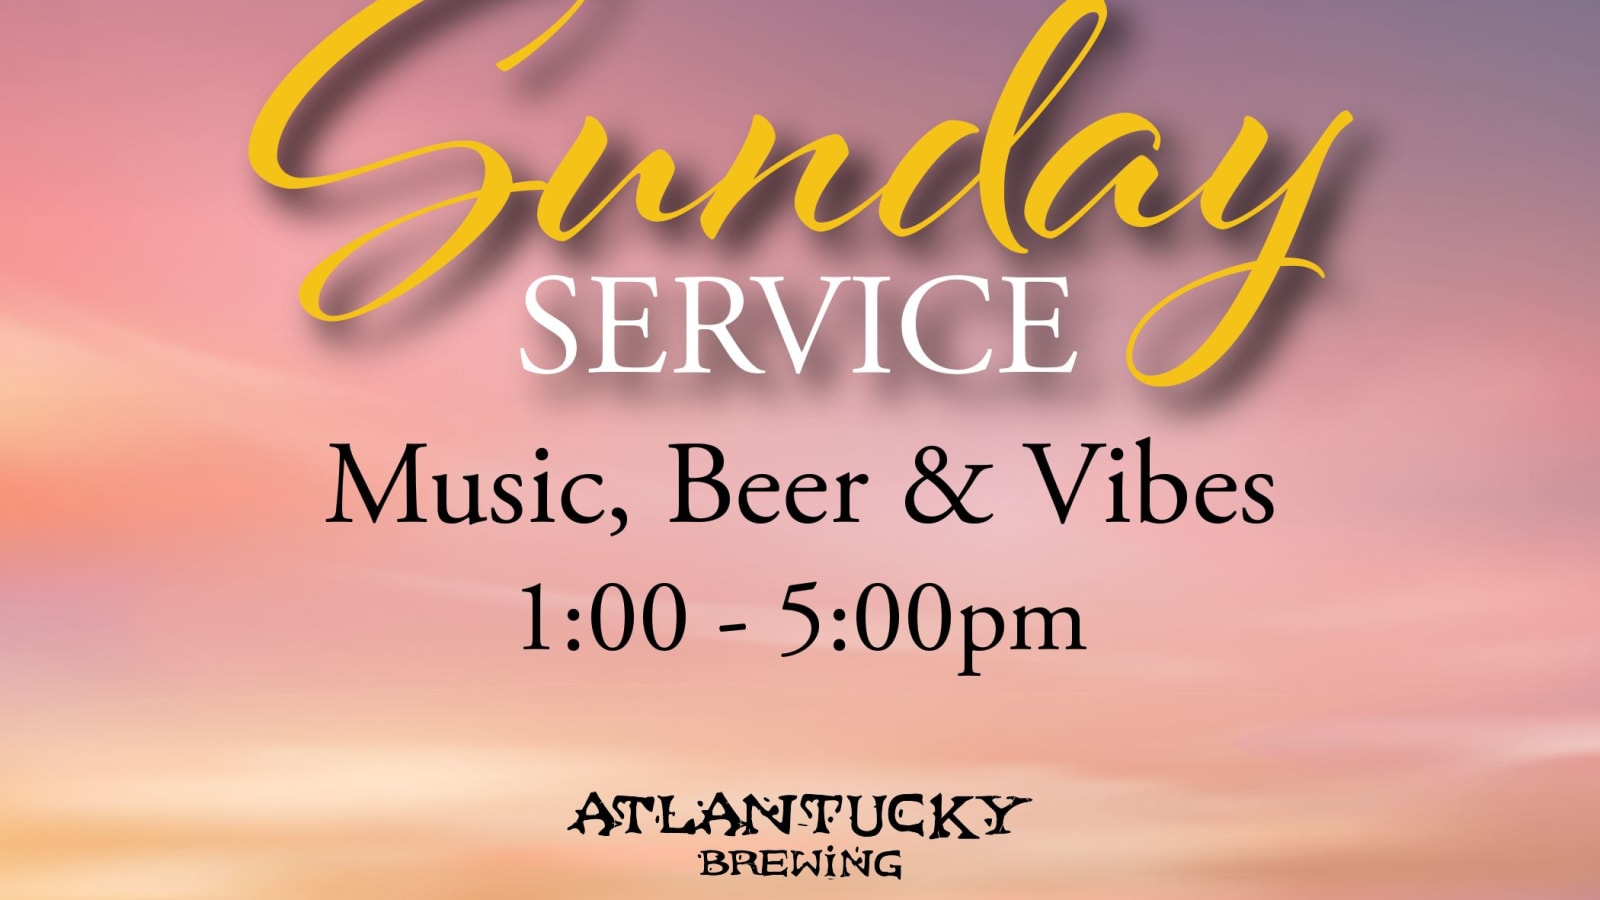 Sunday Service Beer Share